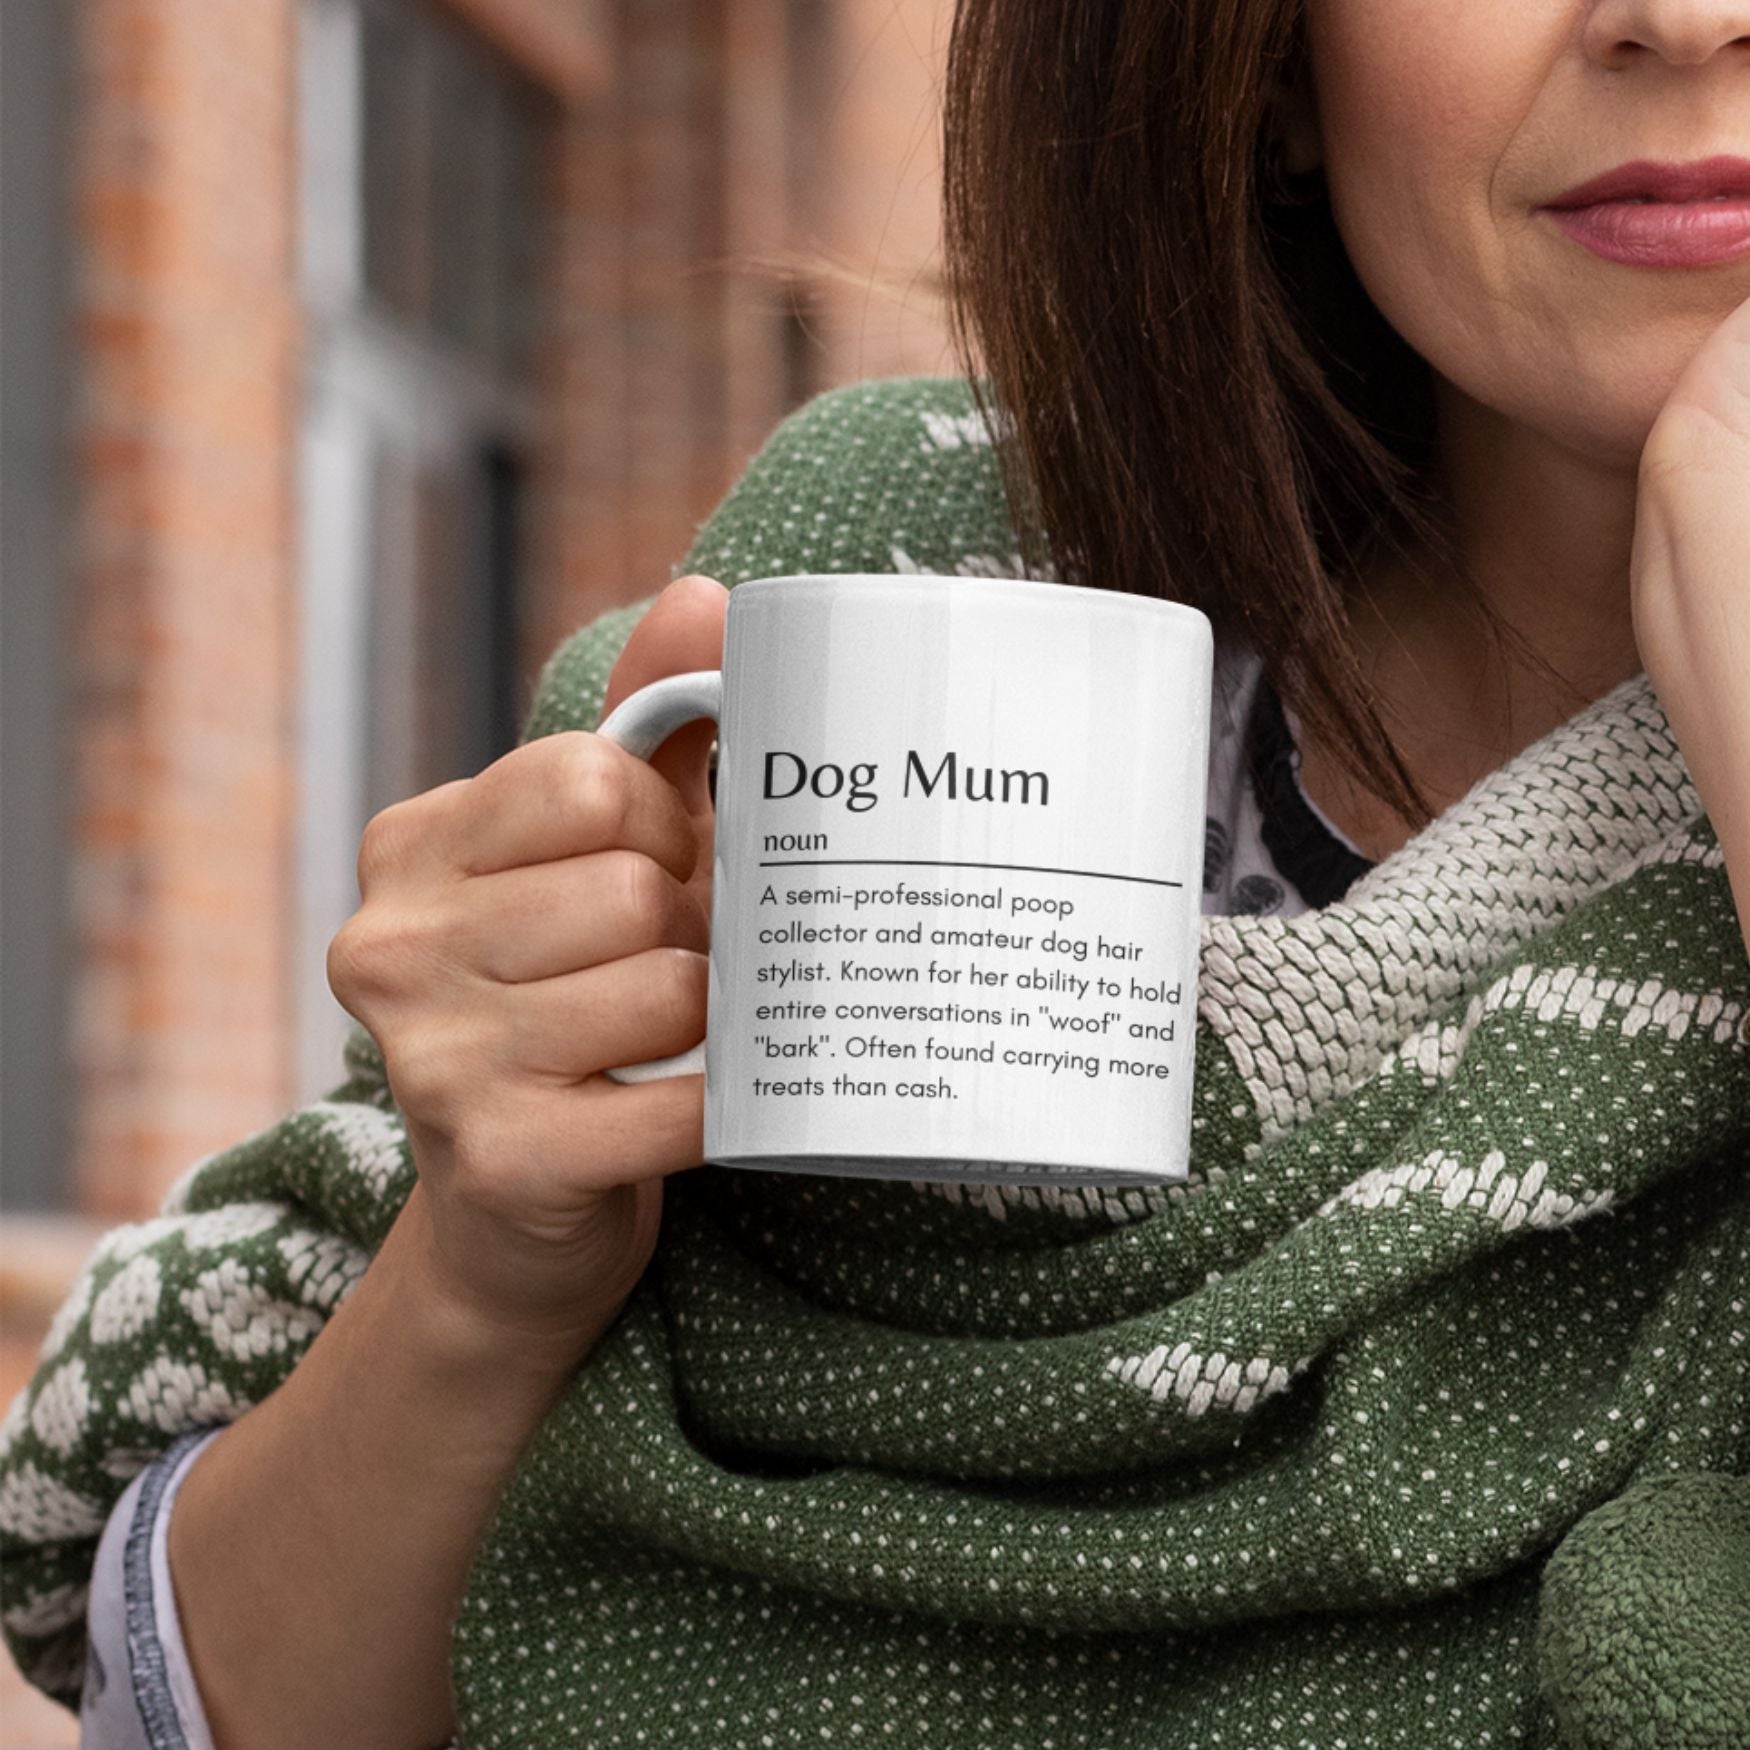 Dog Mum Poop Collector Definition Mug, Best Mug Gift - Sweetie